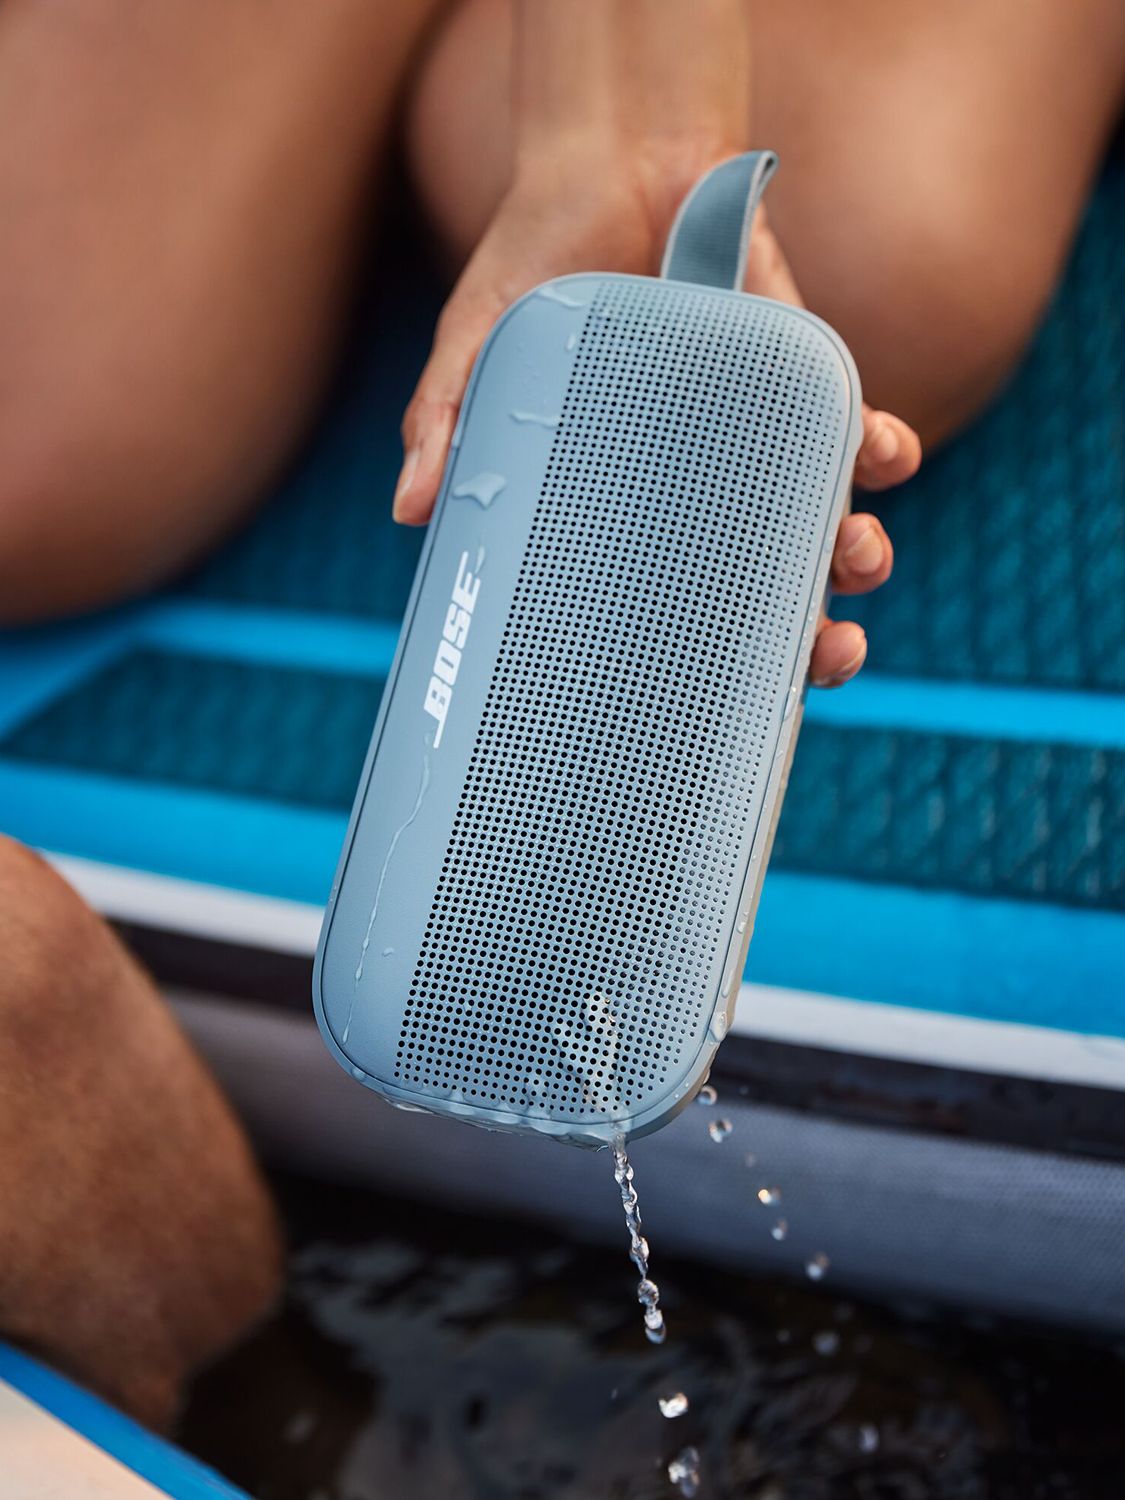 Bose SoundLink Flex Portable Bluetooth Speaker with Waterproof